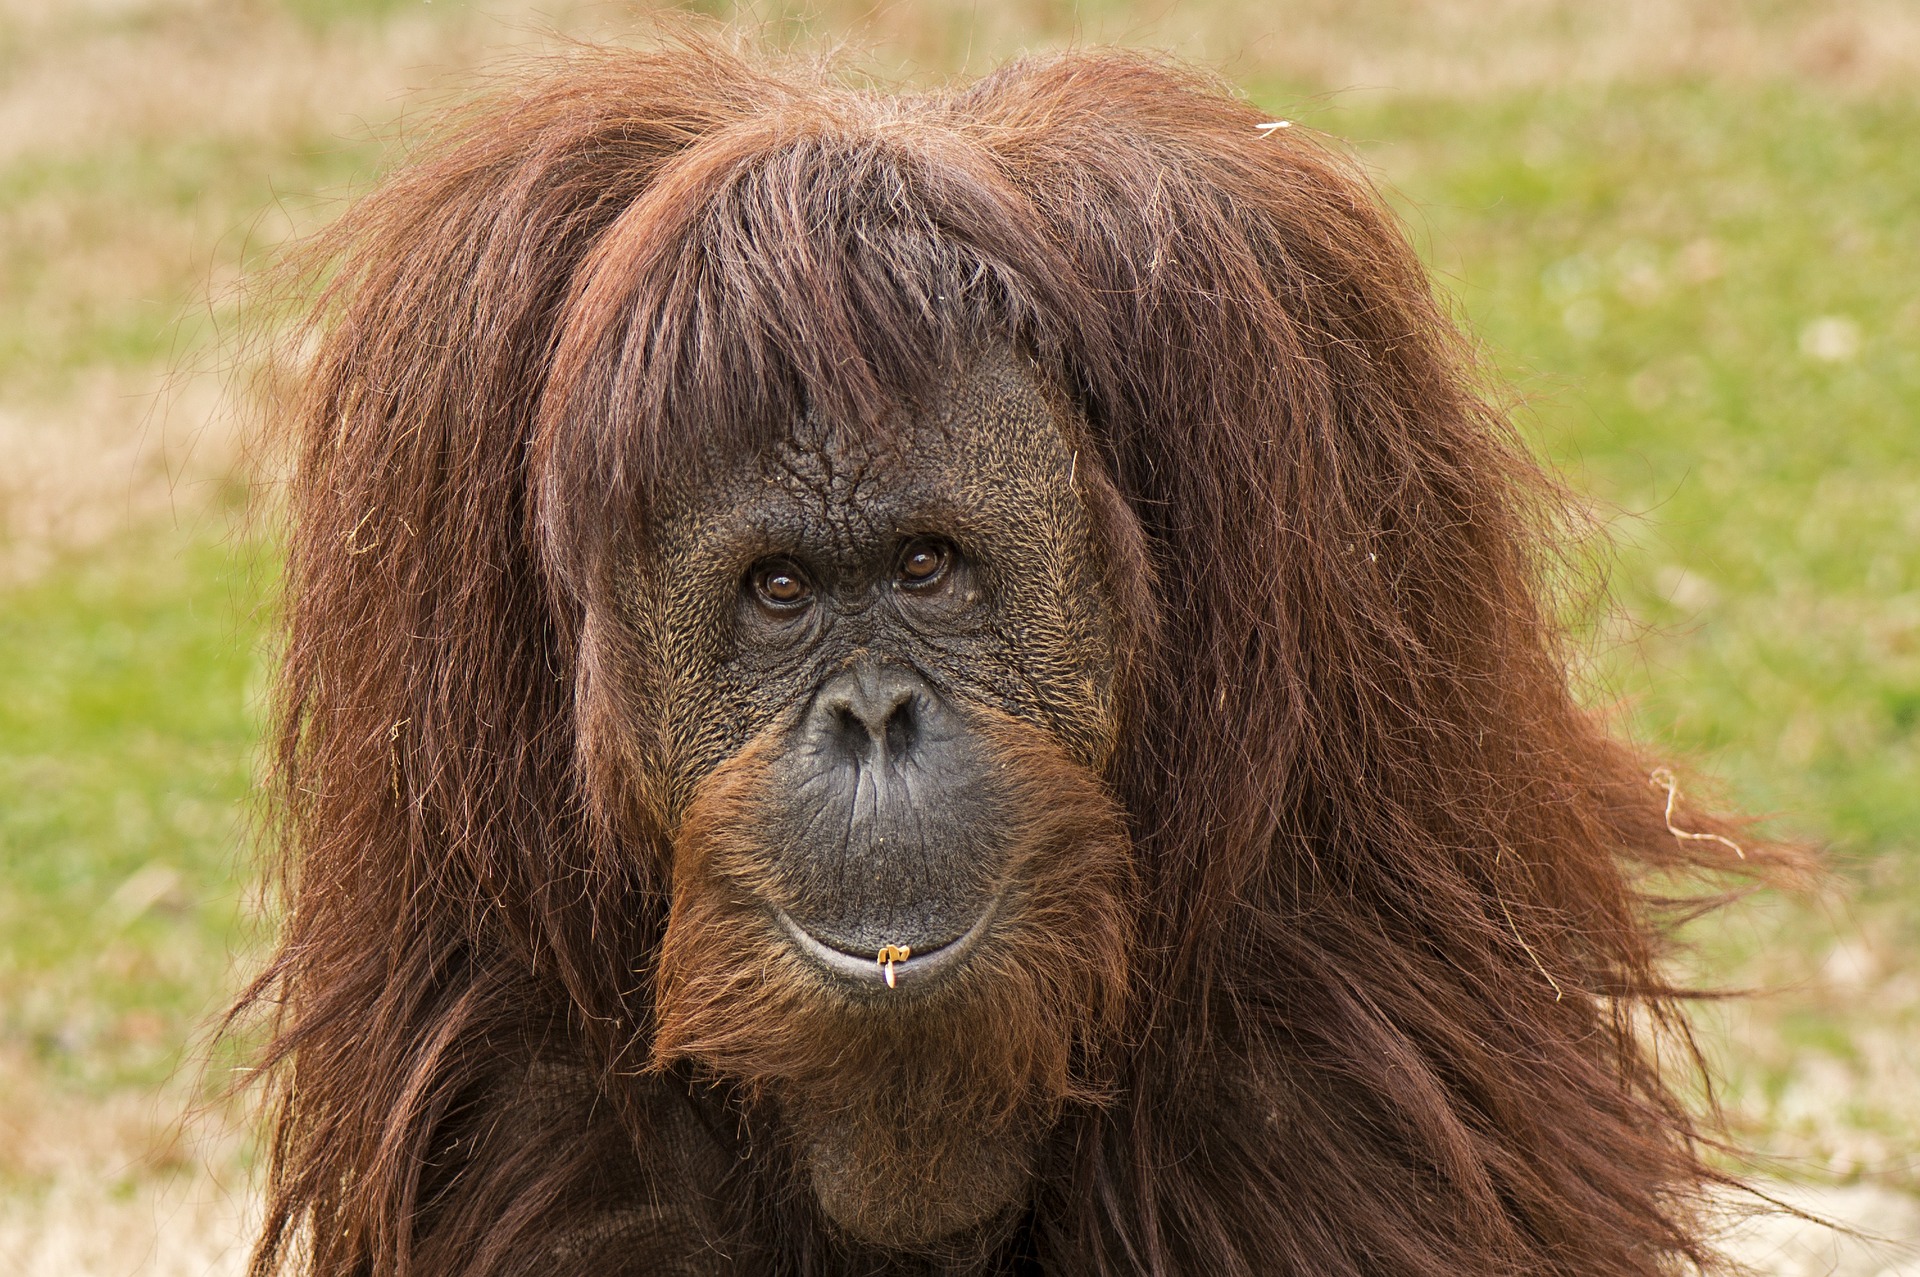 Orangutan Conservancy uses drones to monitor orangutans in Indonesia 